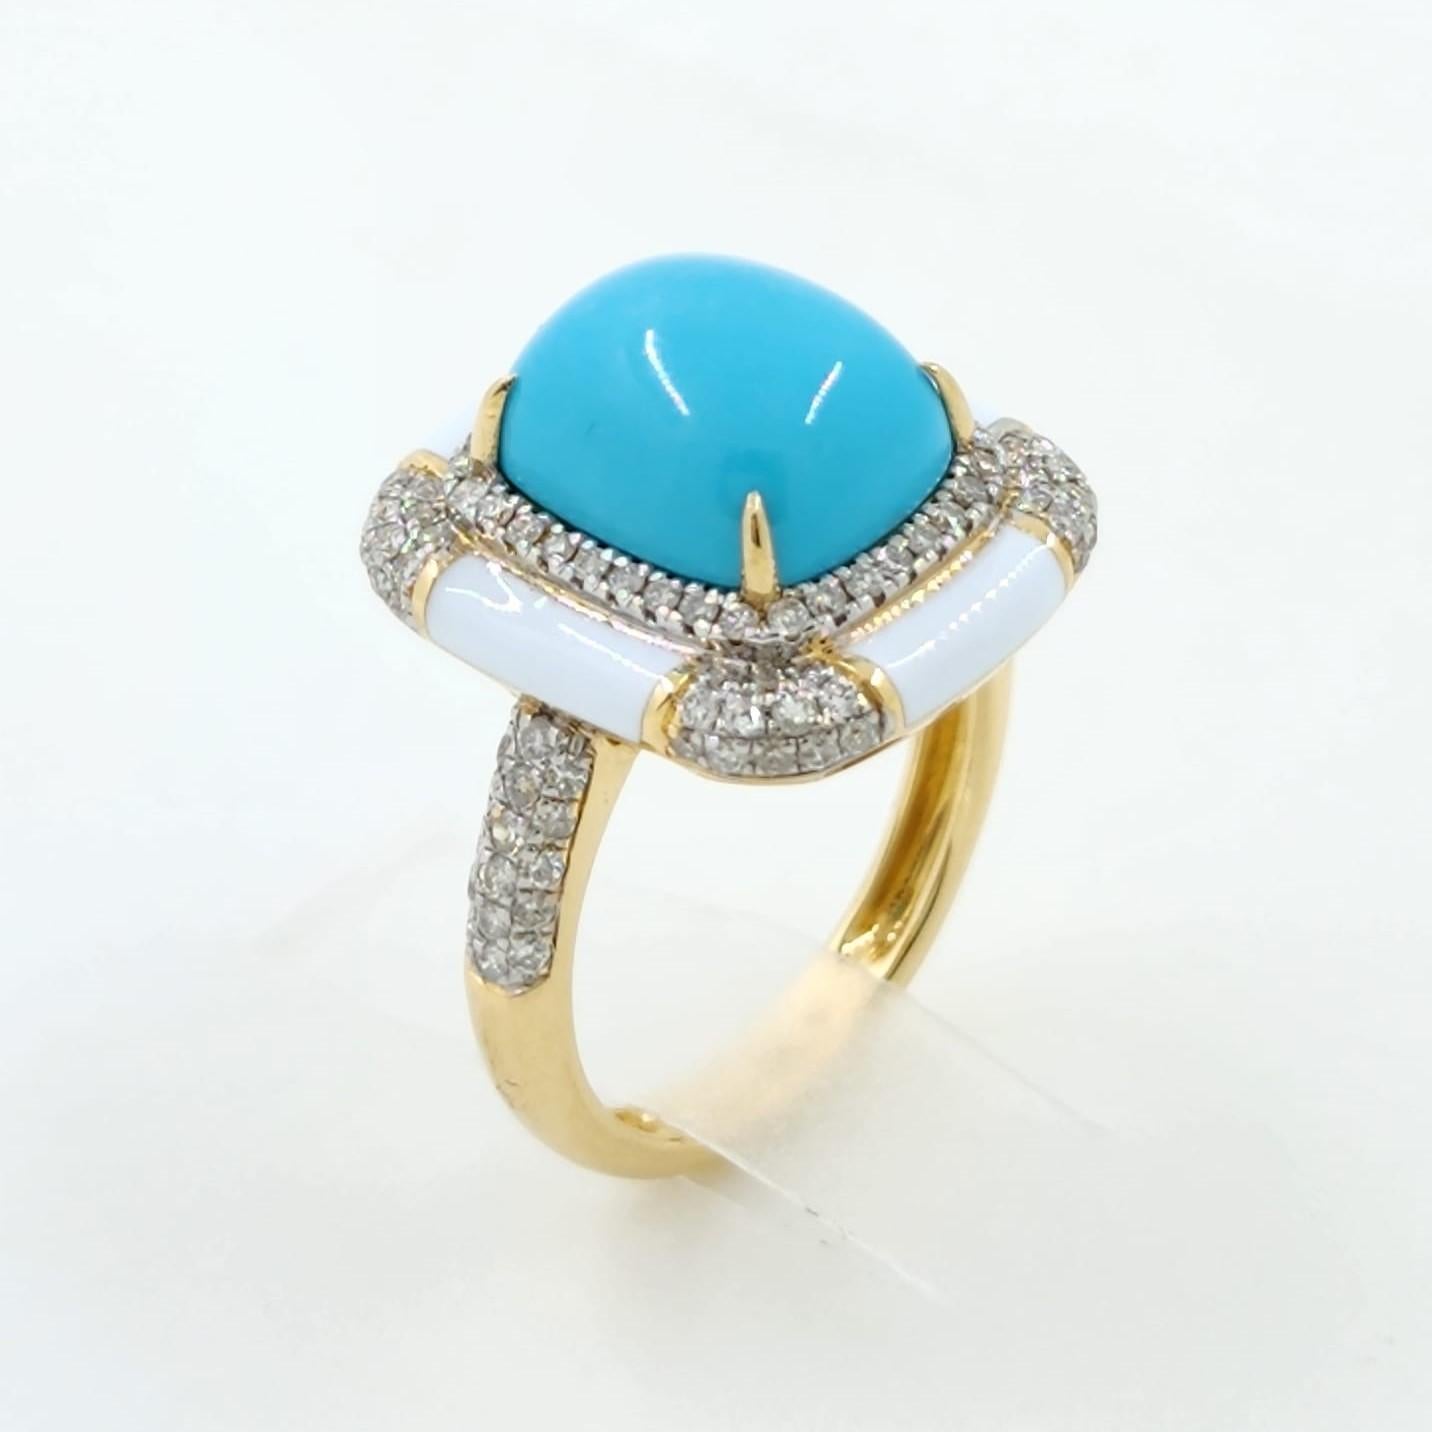 Sleeping Beauty Turquoise Enamel Diamond Art Deco Style Ring in 18K Yellow Gold 1